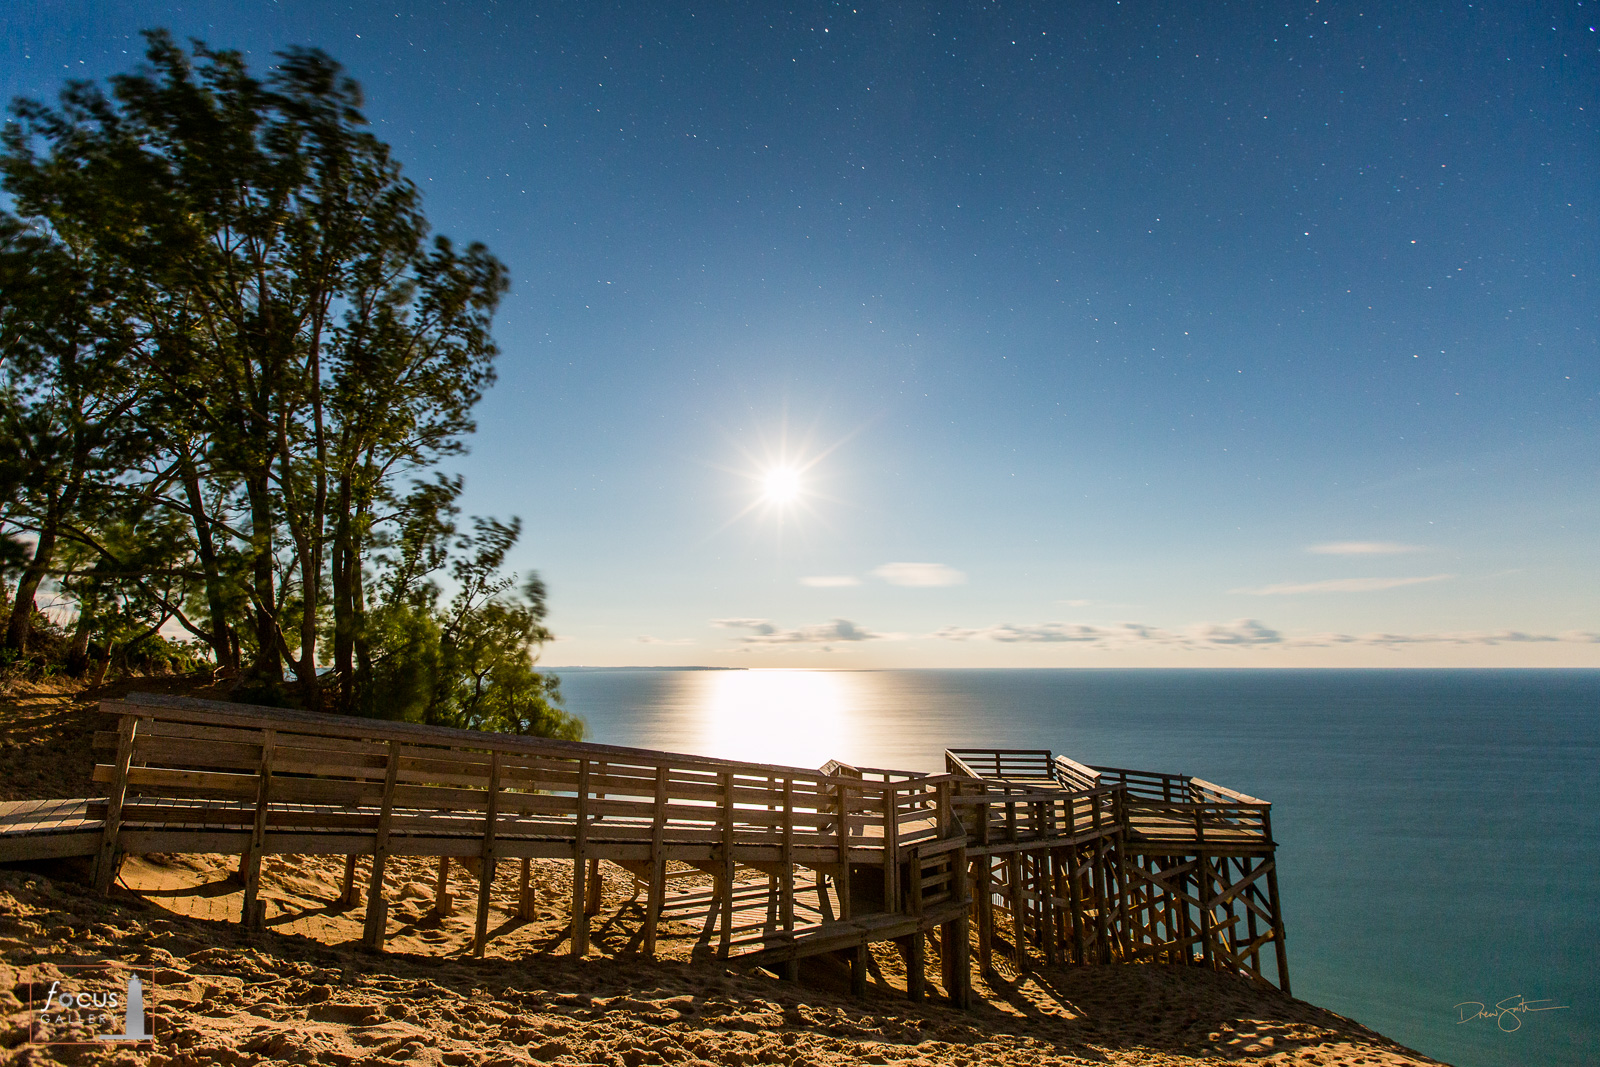 Full moon over the Lake Michigan Overlook platform at Sleeping Bear Dunes National Lakeshore.